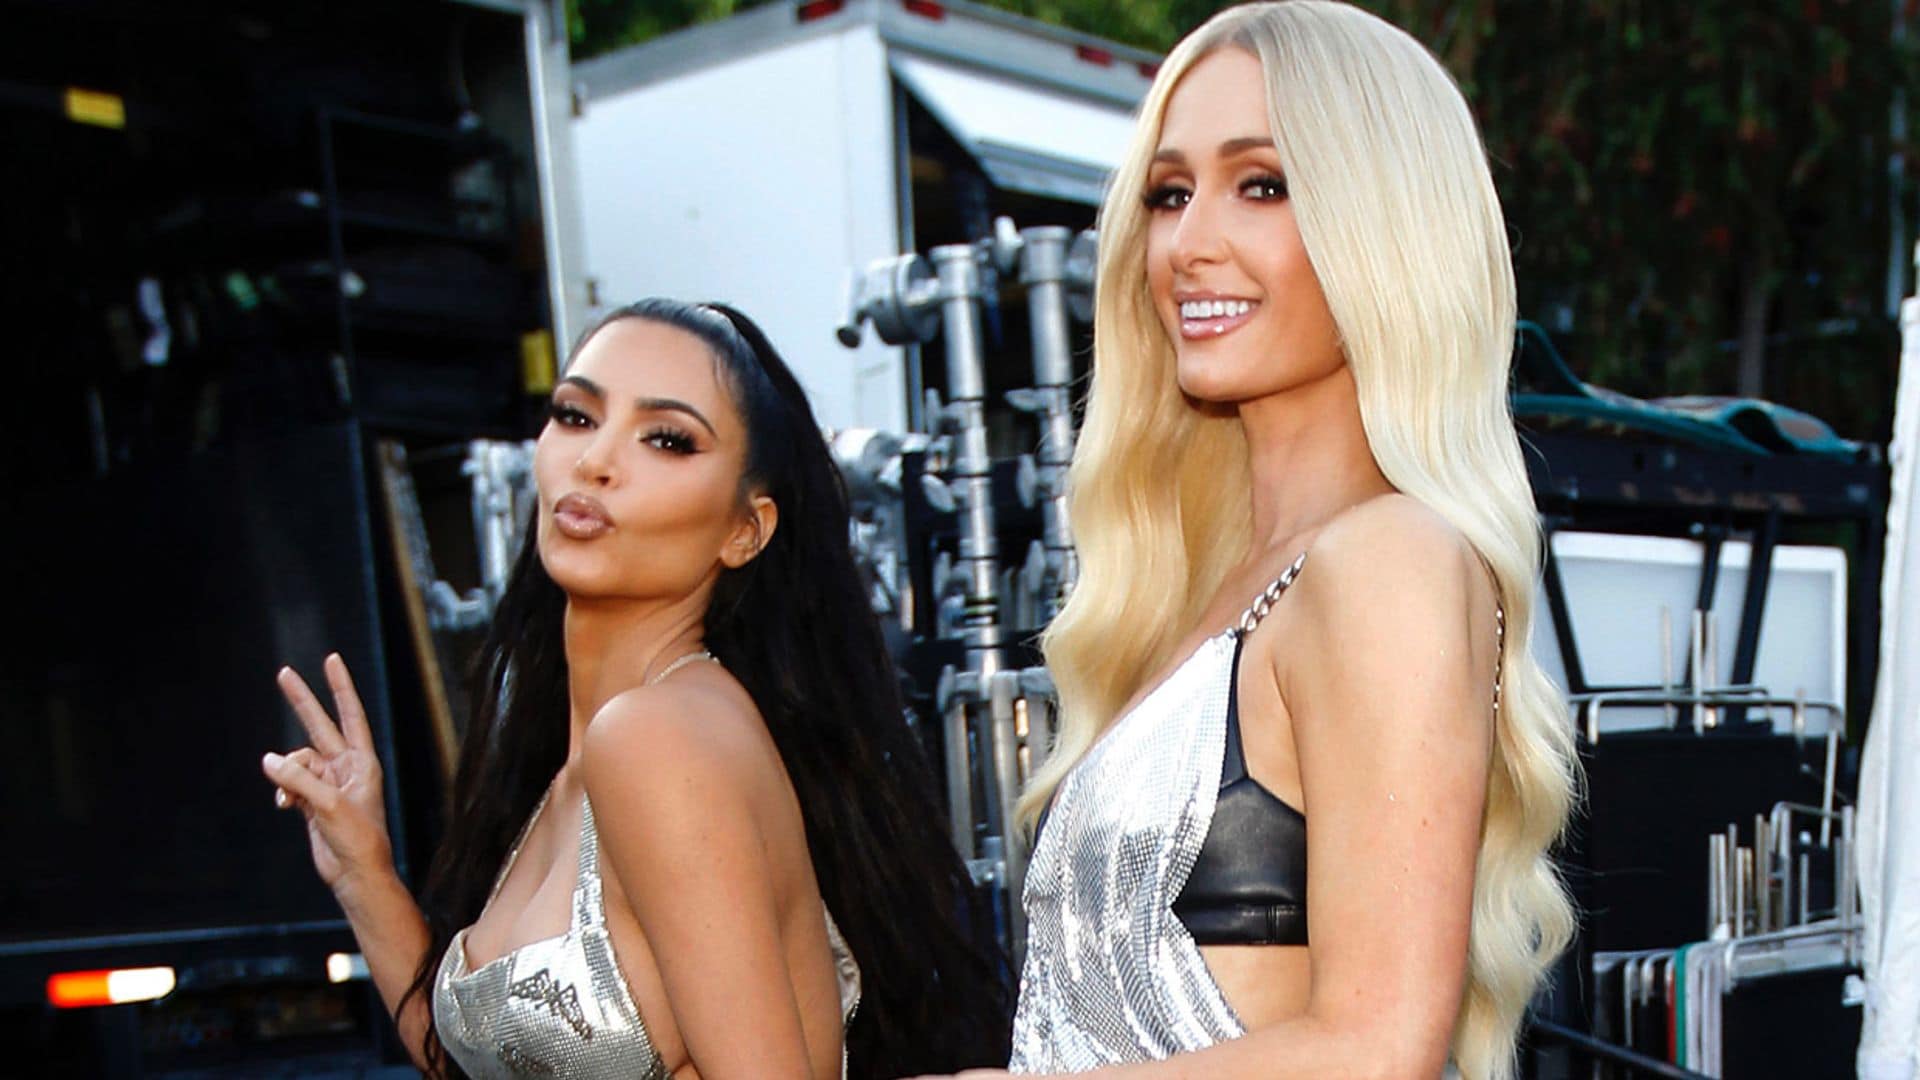 La impresionante fiesta navideña que ha unido a las familias de Paris Hilton y Kim Kardashian